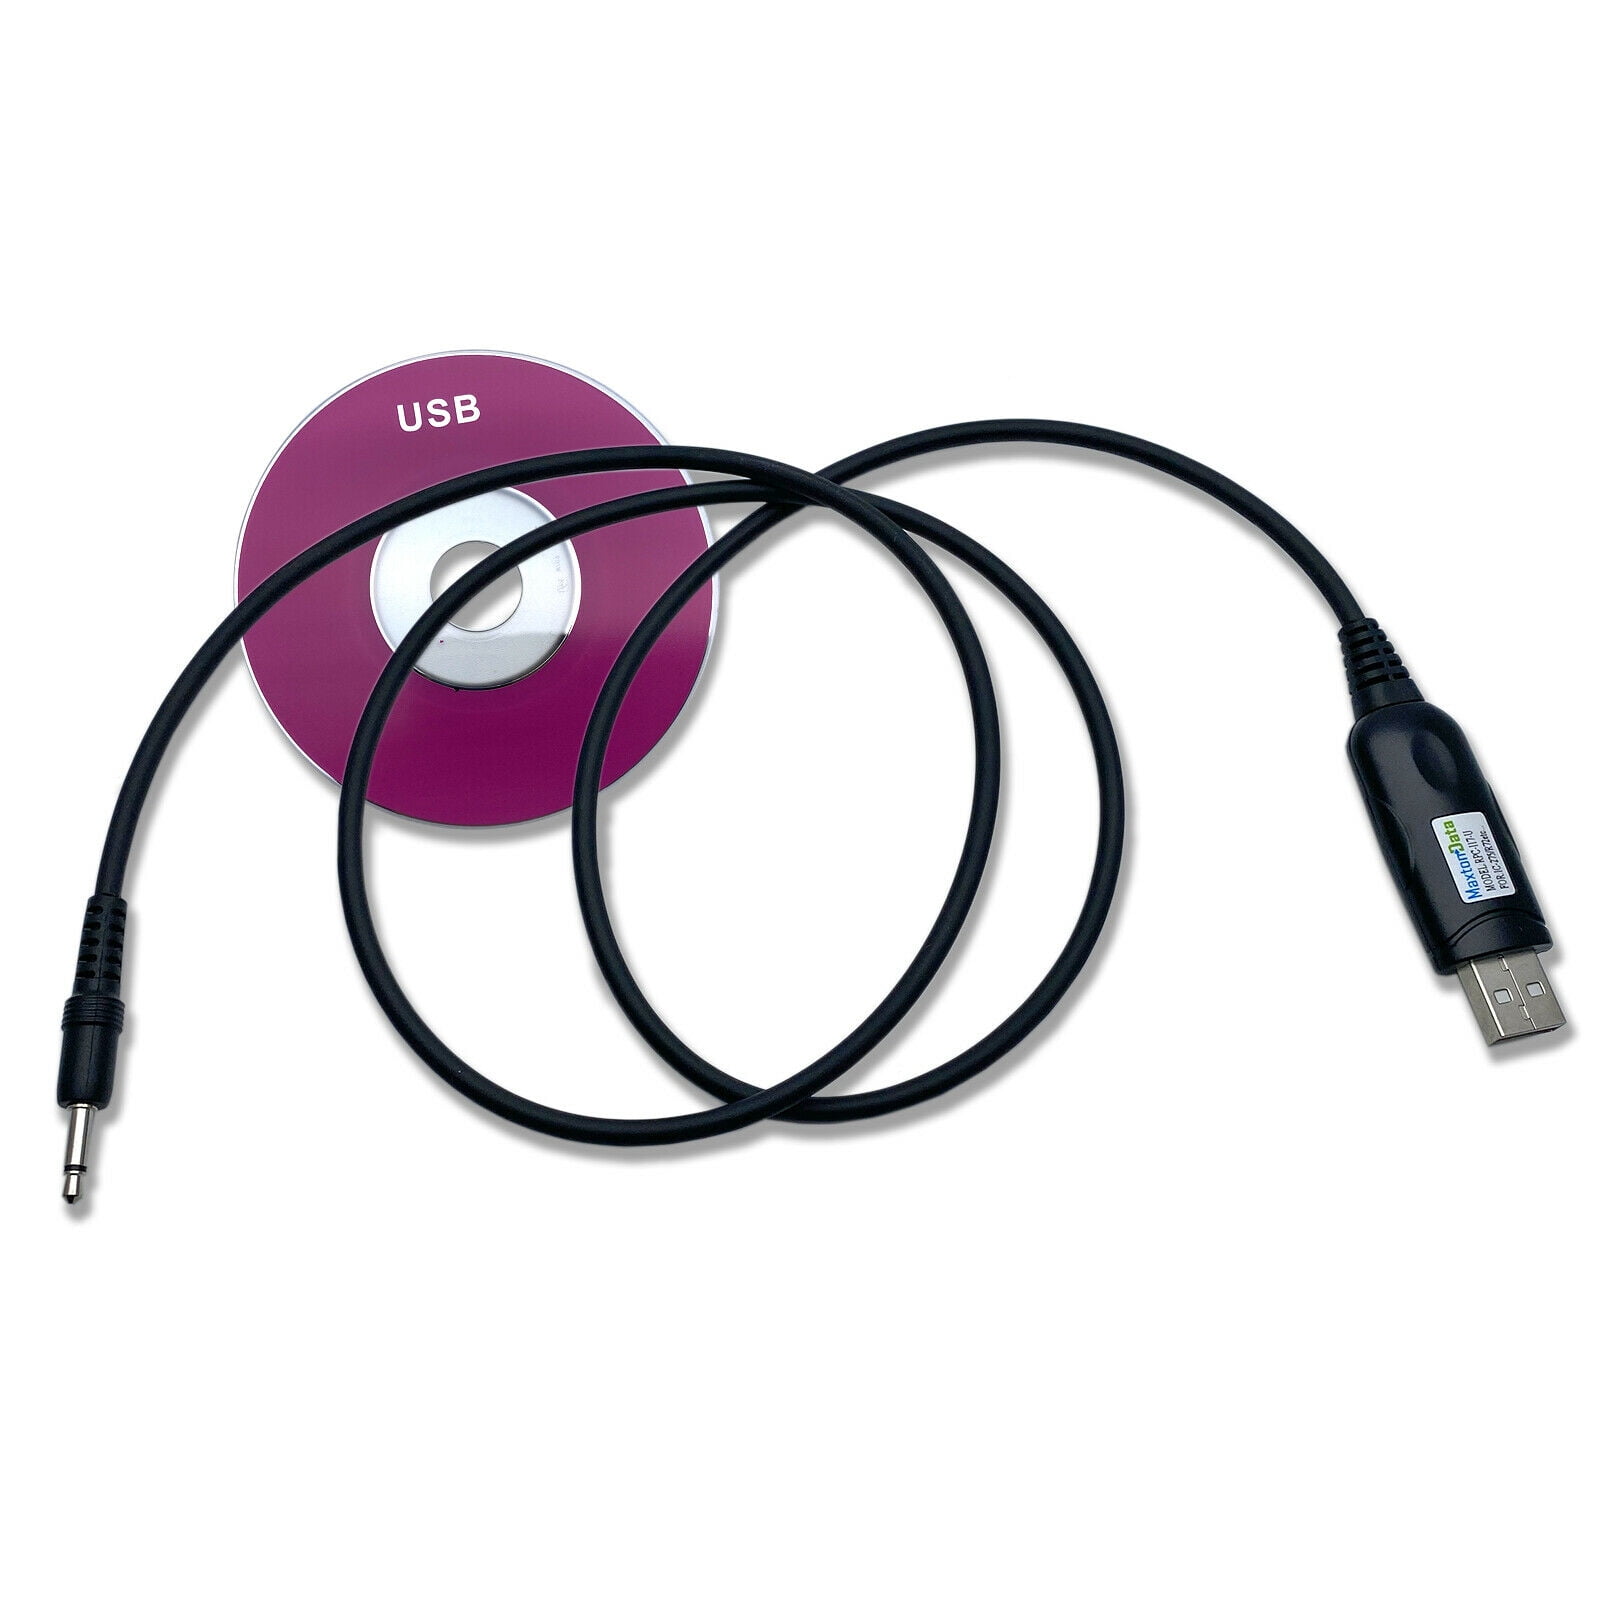 USB Programming Cable for Icom IC-731 IC-732 IC-735 IC-736 IC-737